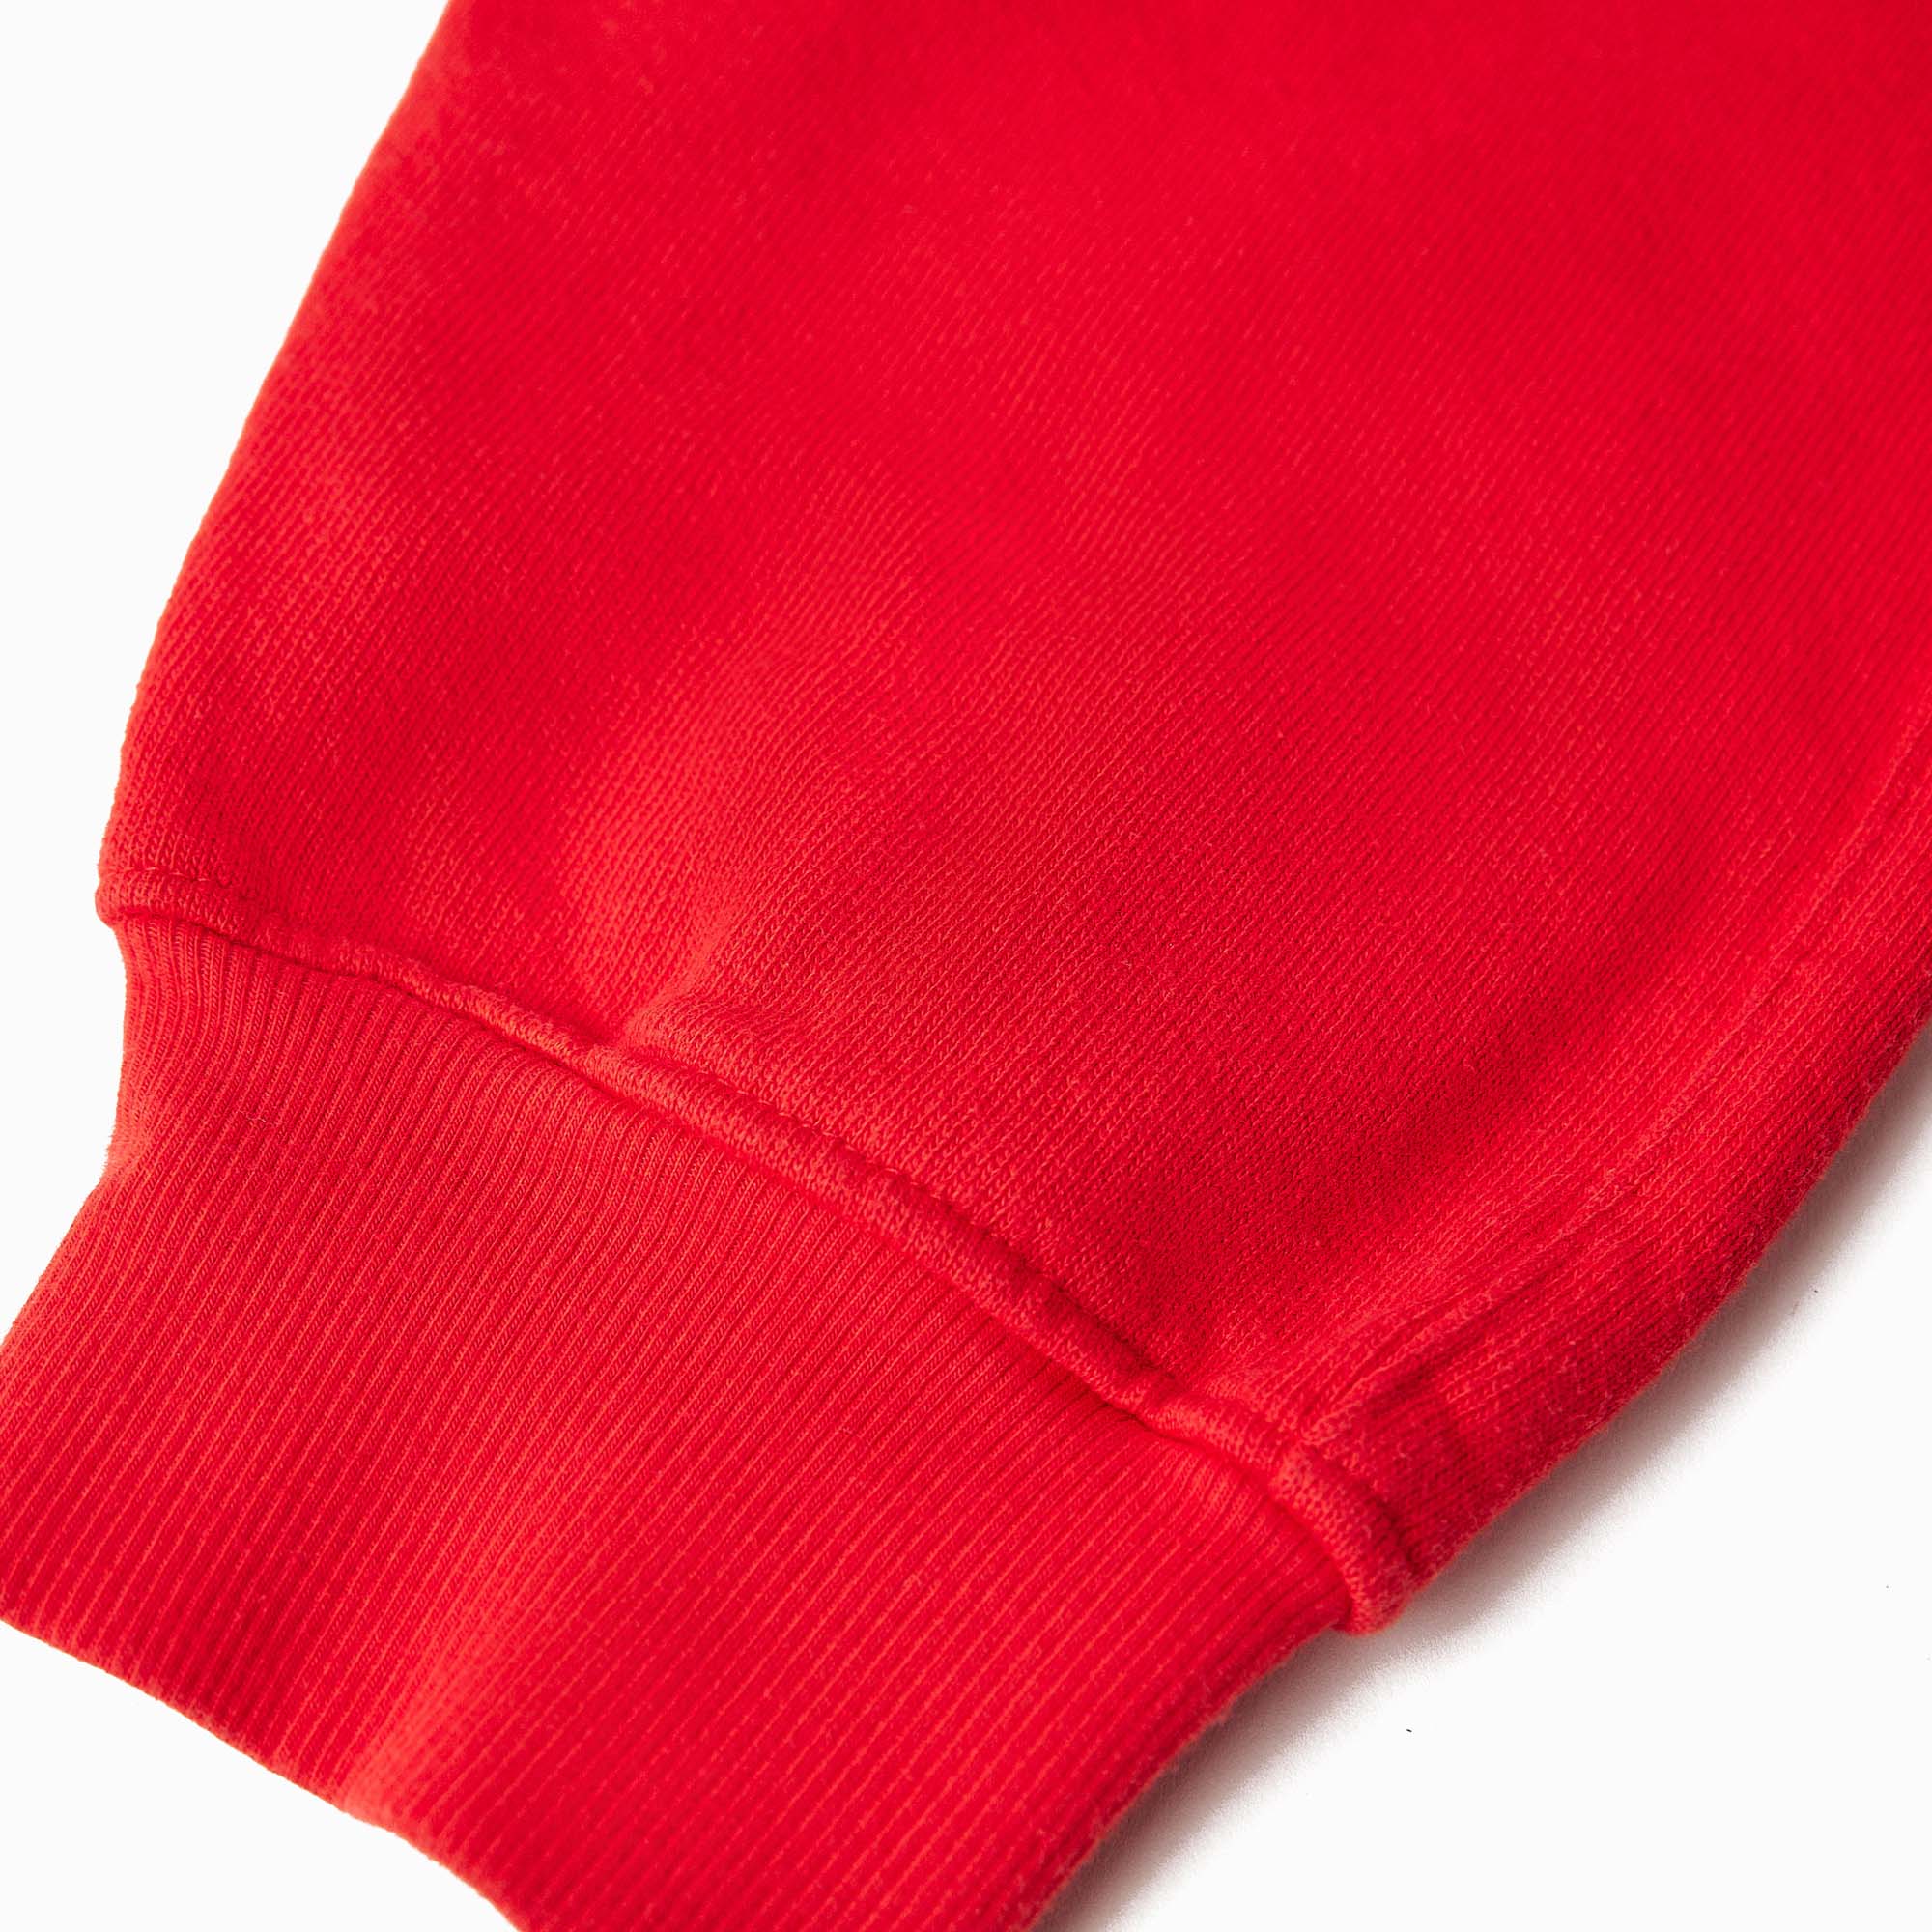 USA sweatshirt / red